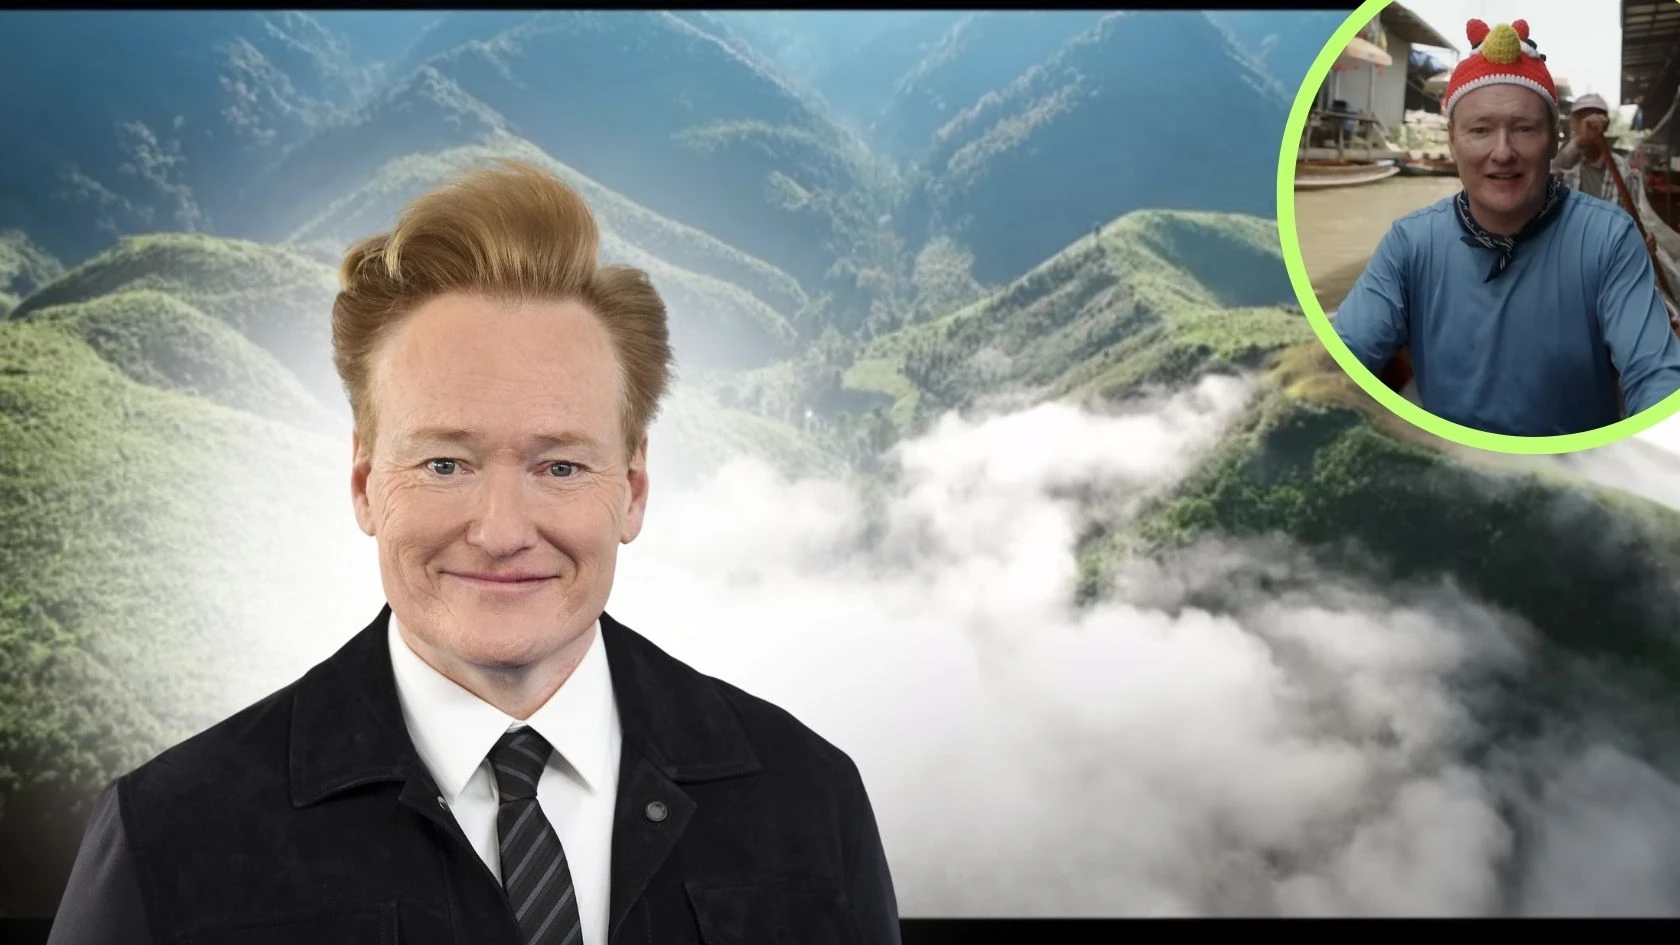 Conan O'Brien Embraces Change with New Travel Series Conan O'Brien Must Go”